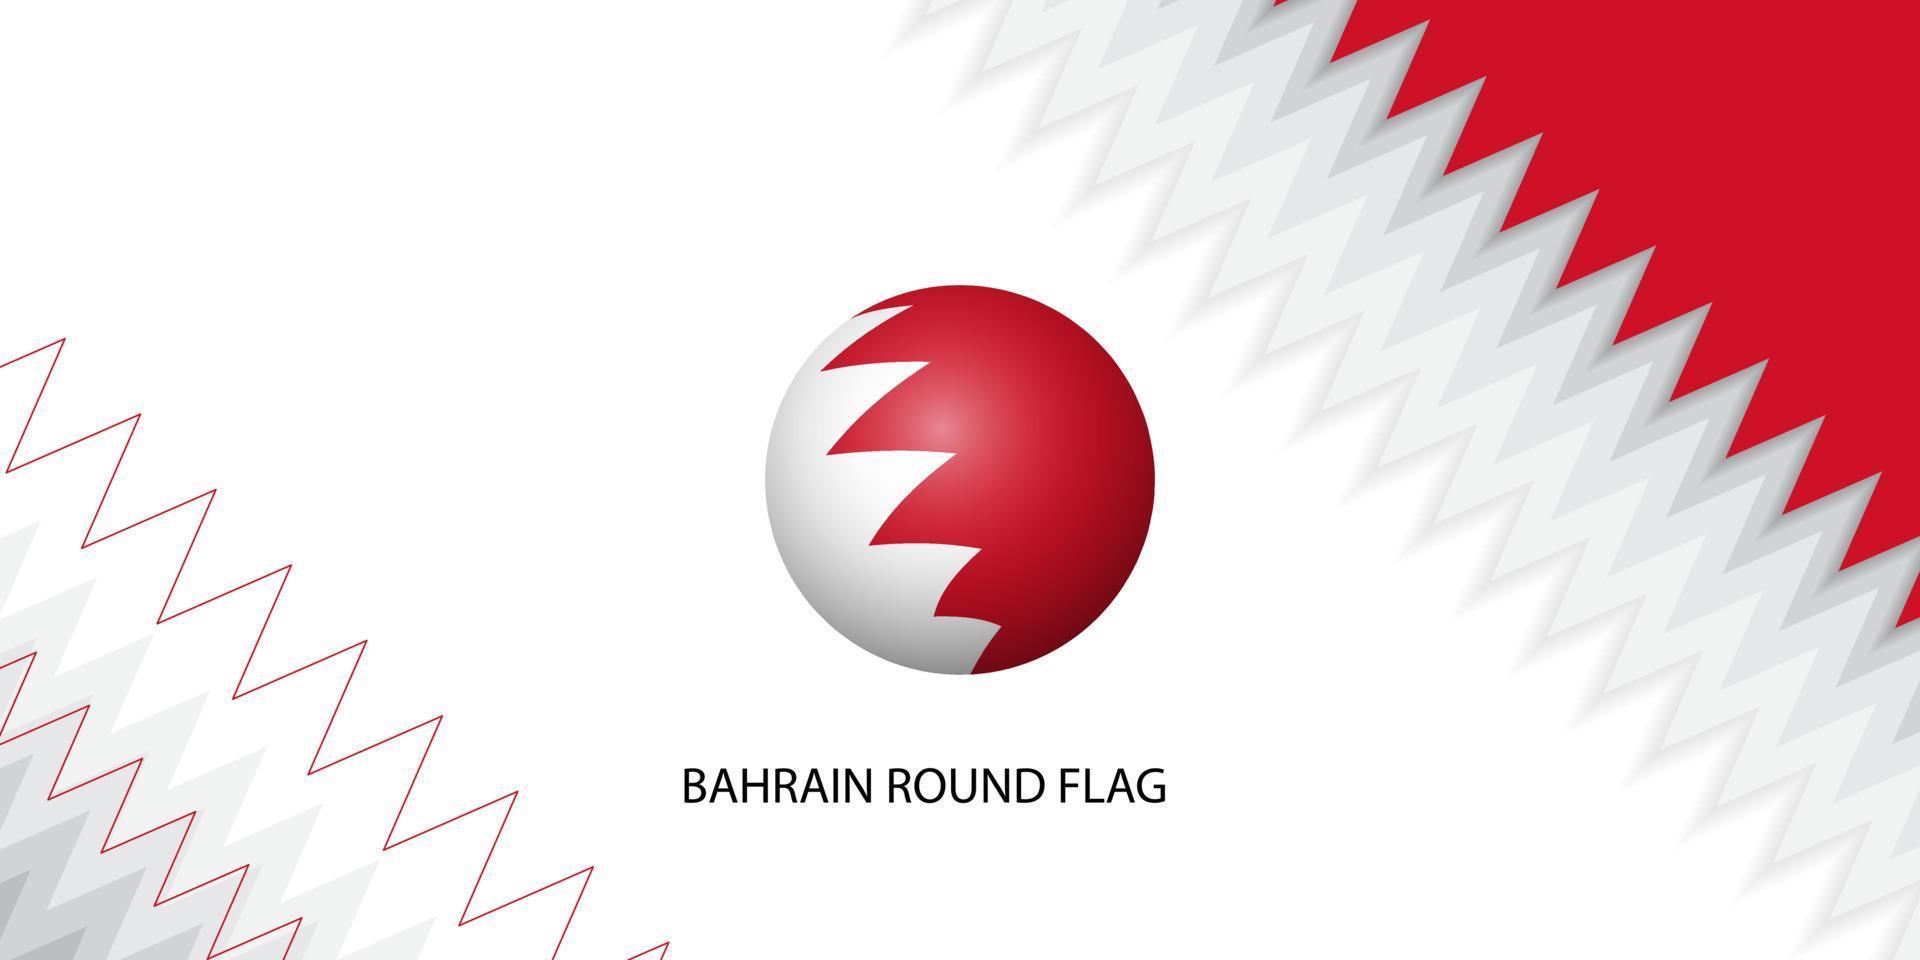 Bahrain round flag vector illustration. Bahrain Independence Day background template design.